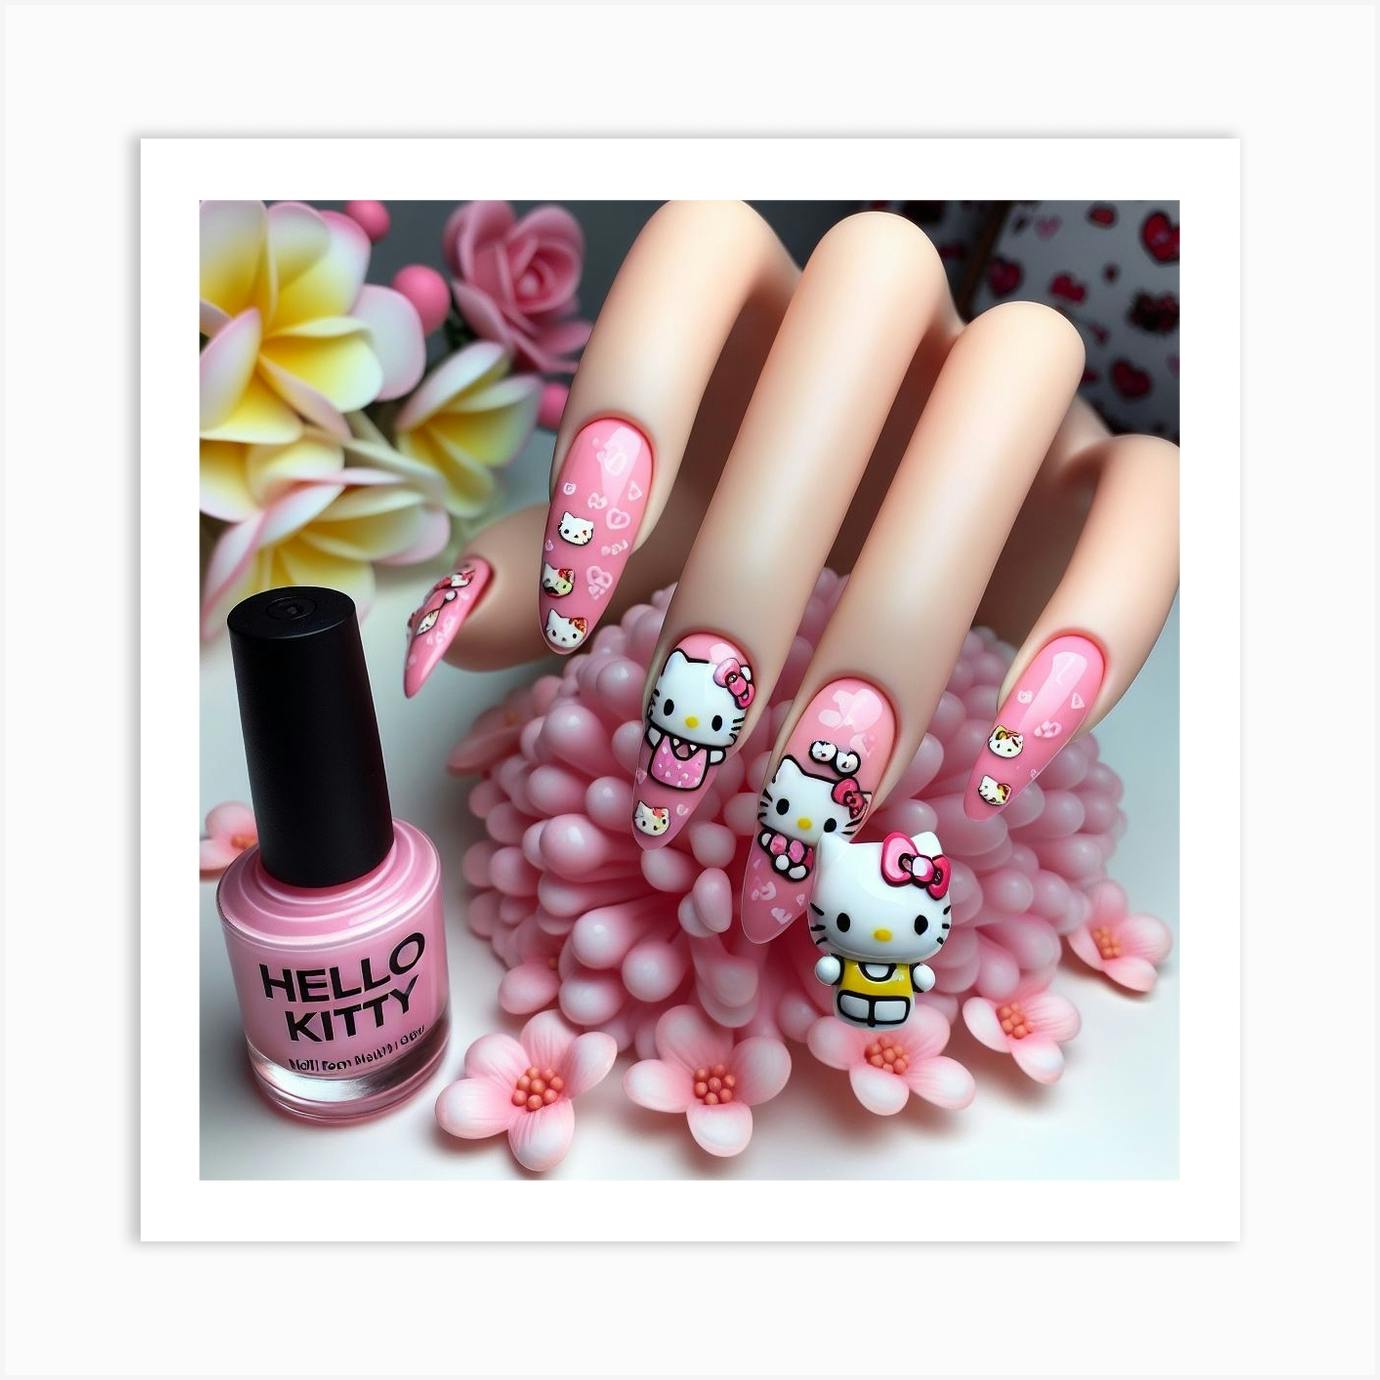 SANRIO Hello Kitty Nail Polish Set for Kids Cosmetics | eBay